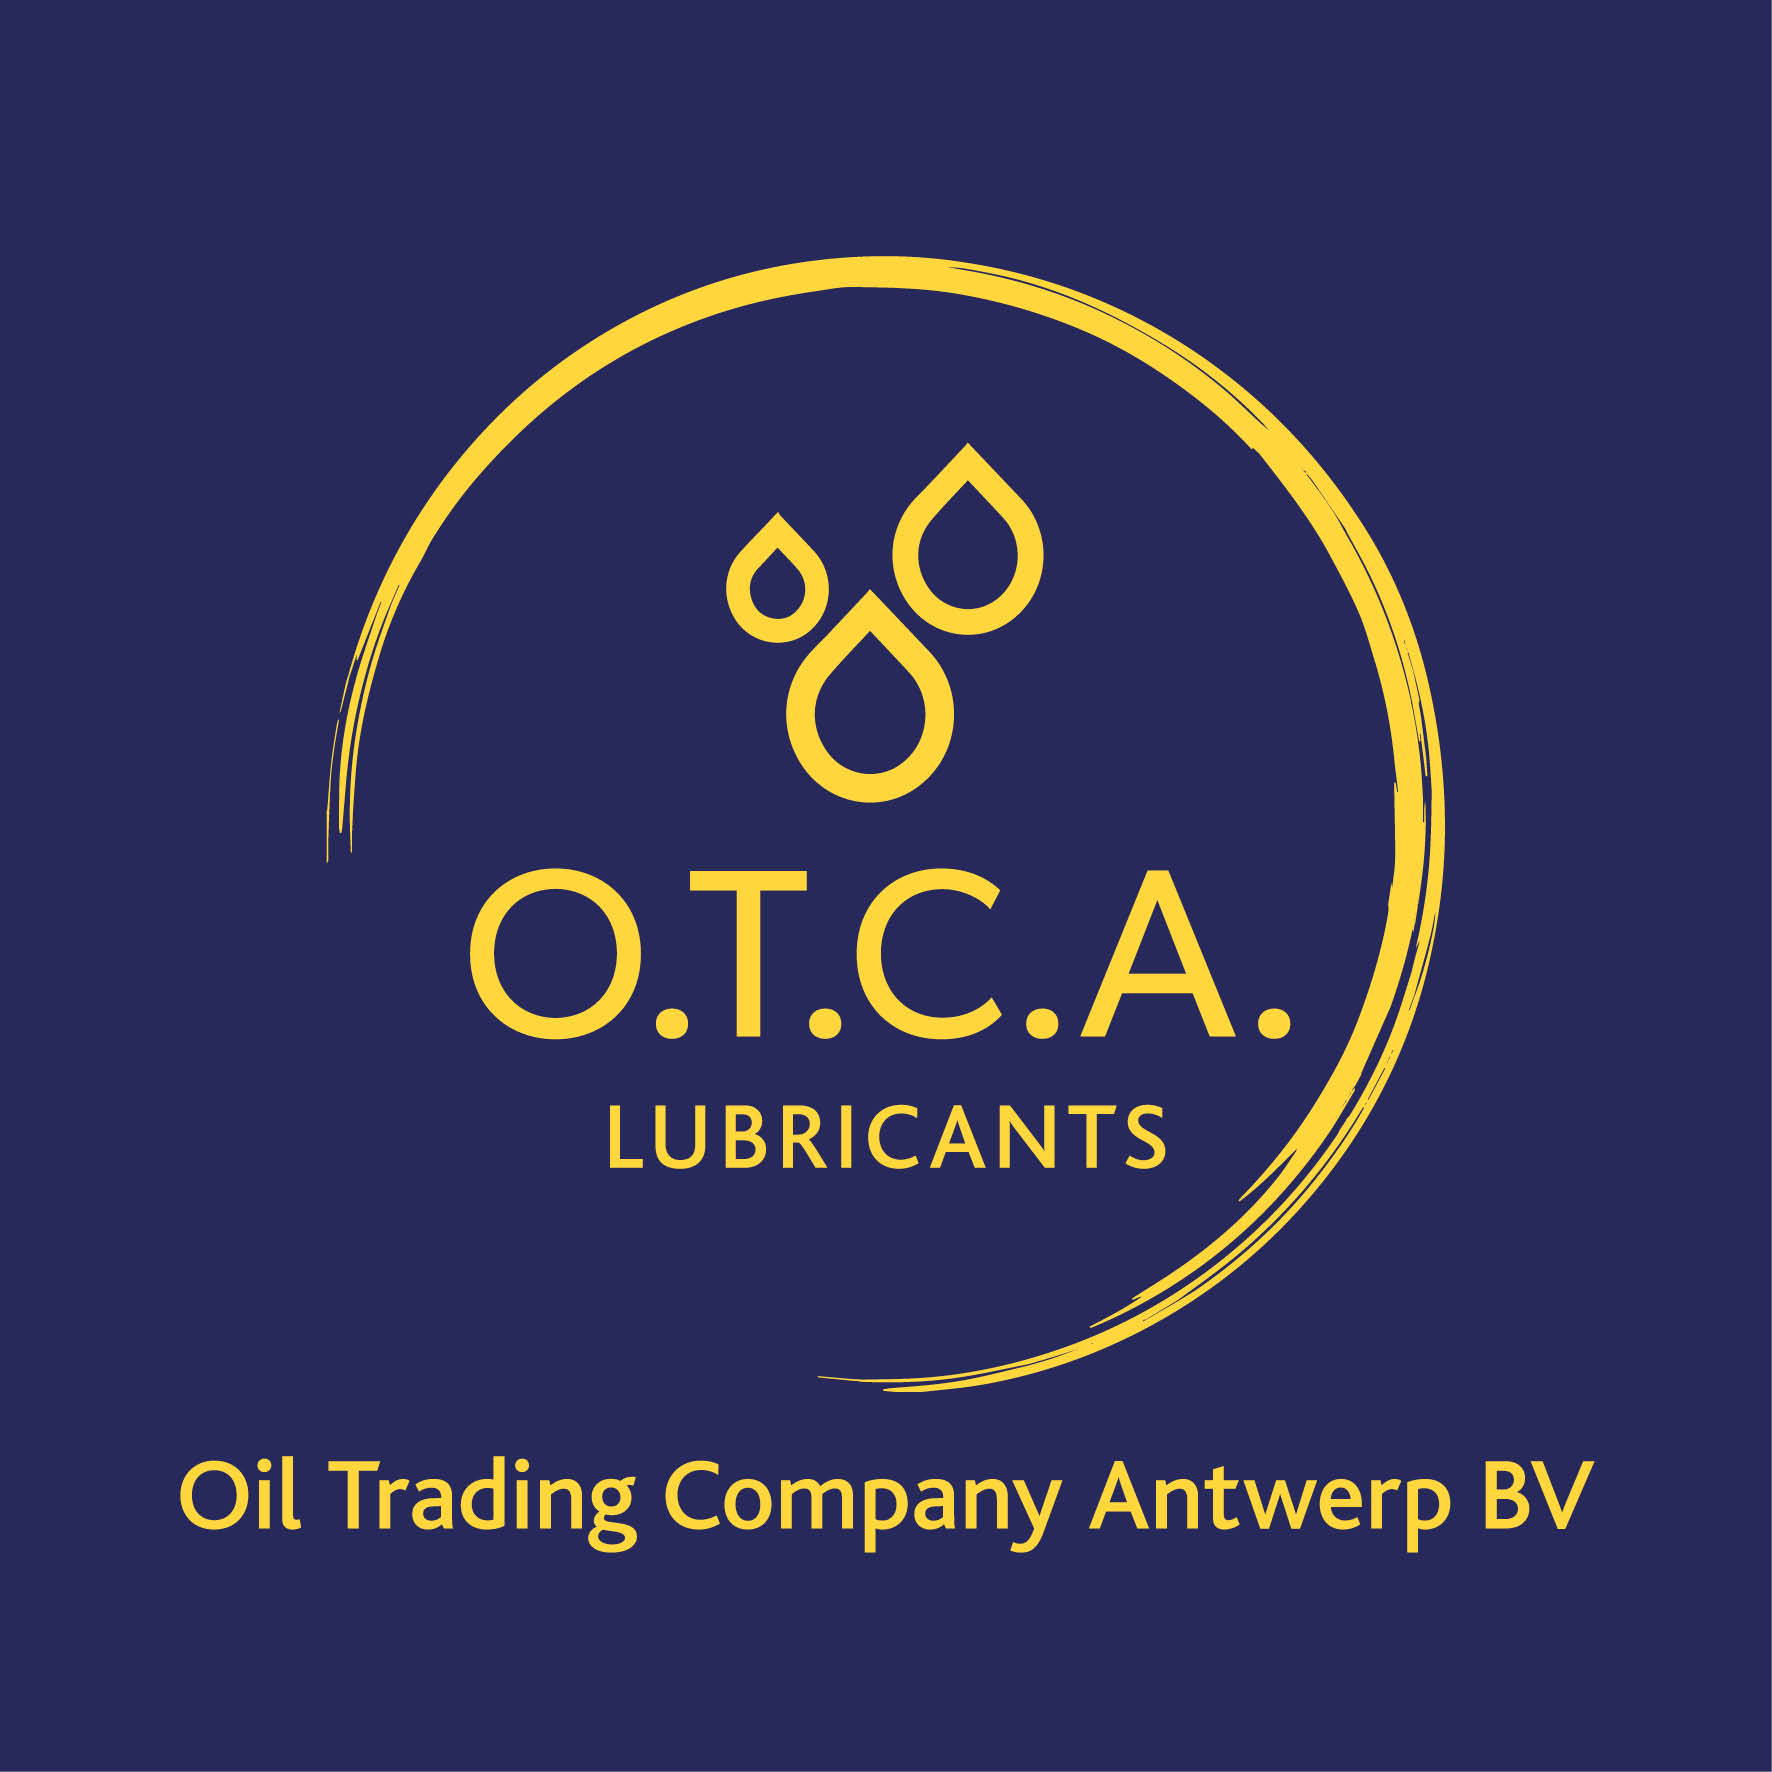 Oil trading company antwerp